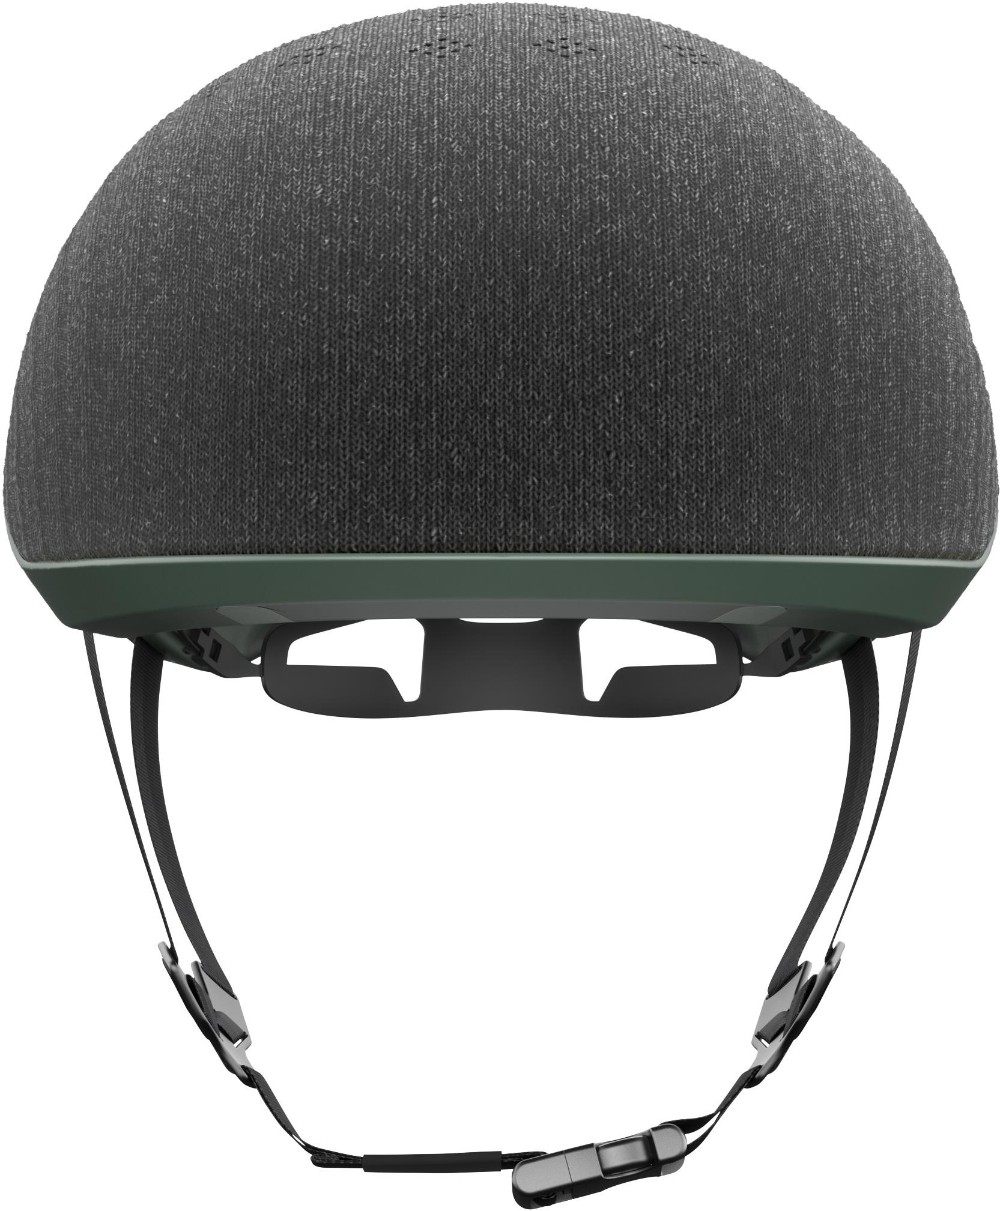 Myelin Urban/Commuter Helmet image 2